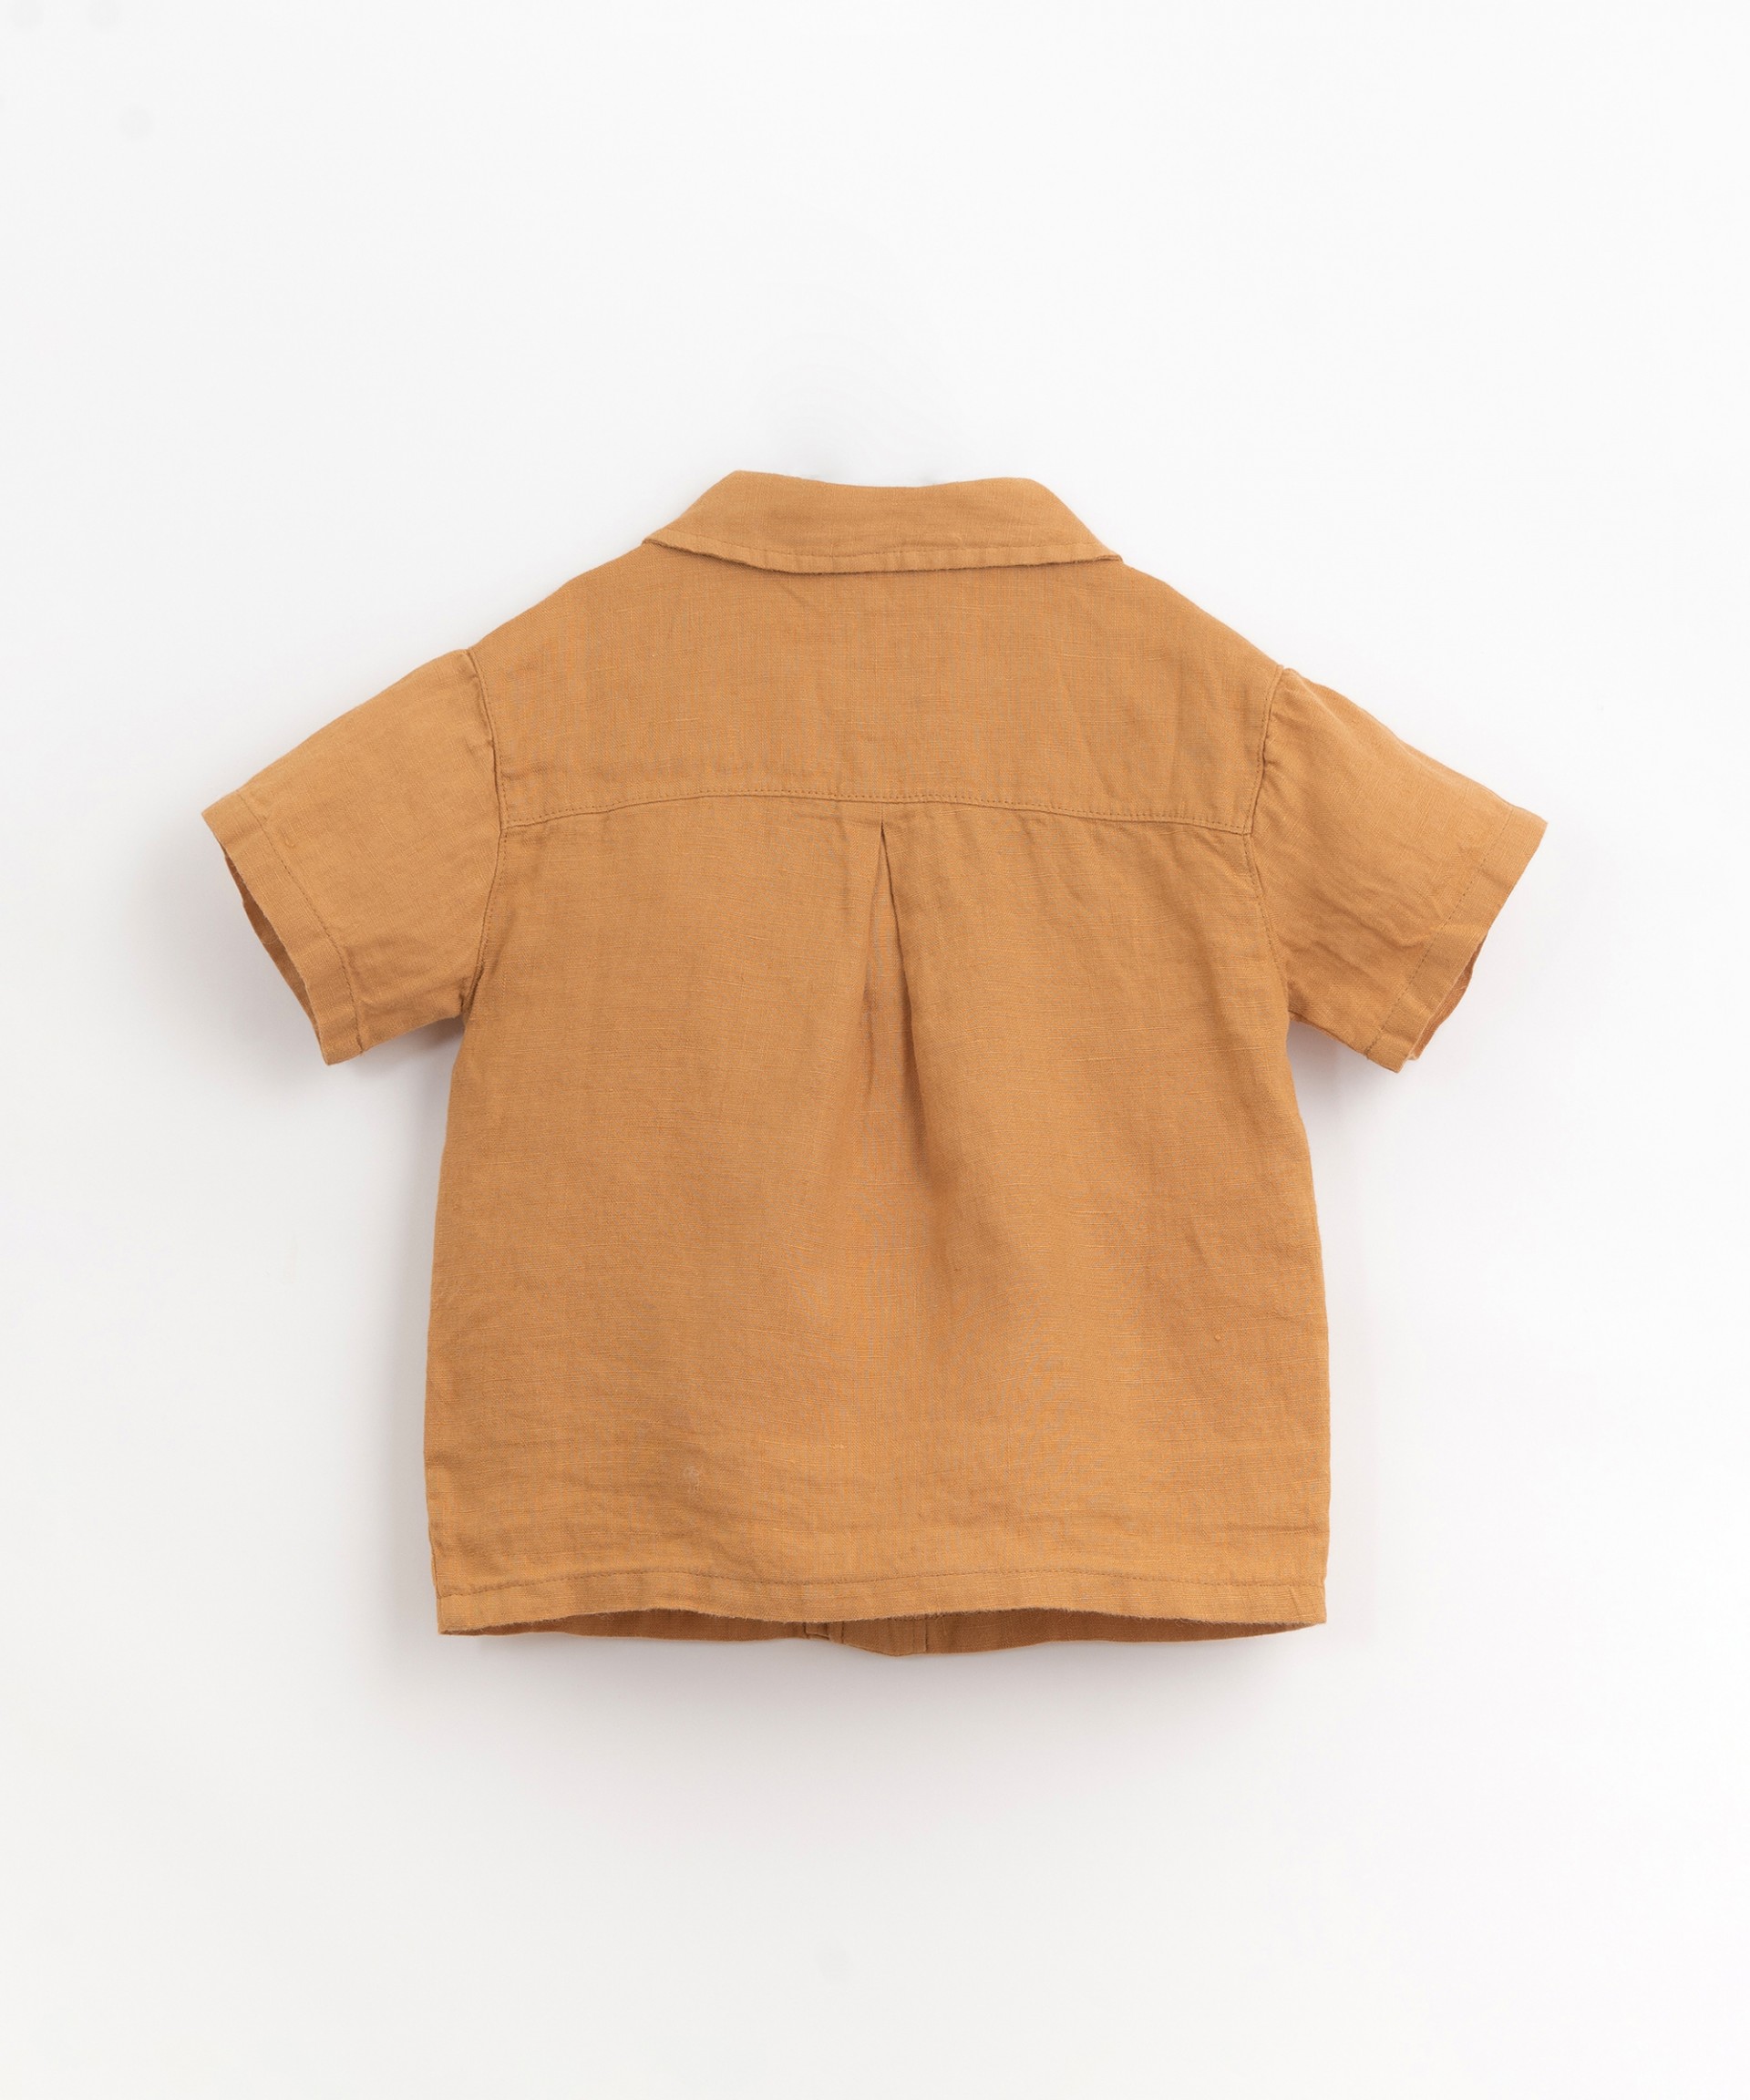 Linen shirt with pocket | Organic Care